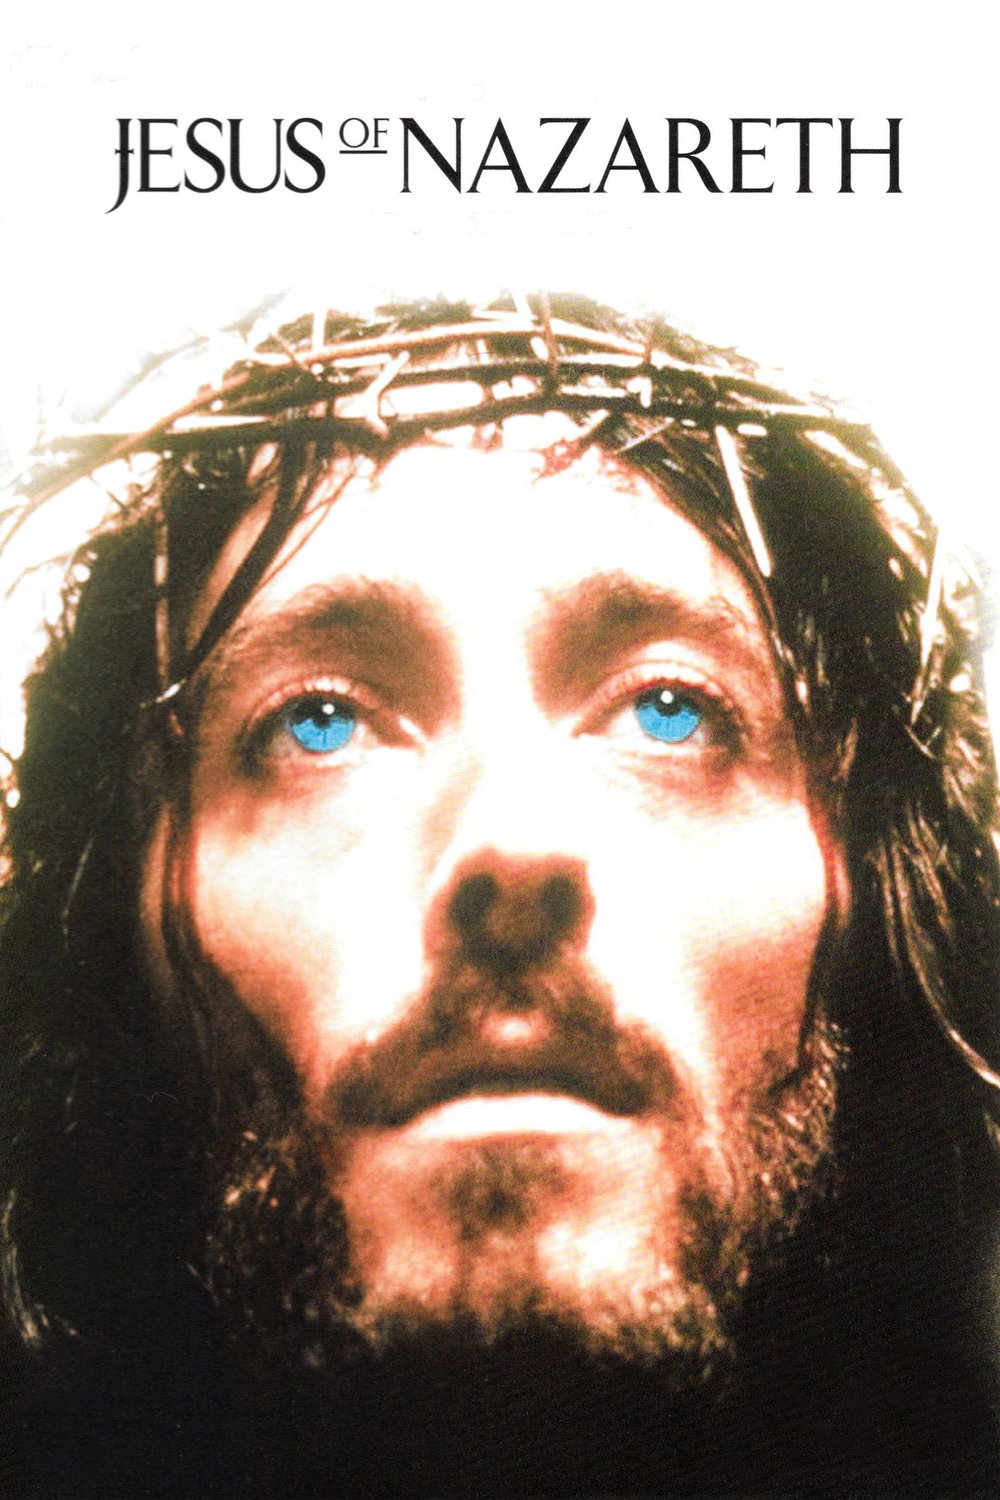 Poster of the movie Jesus of Nazareth